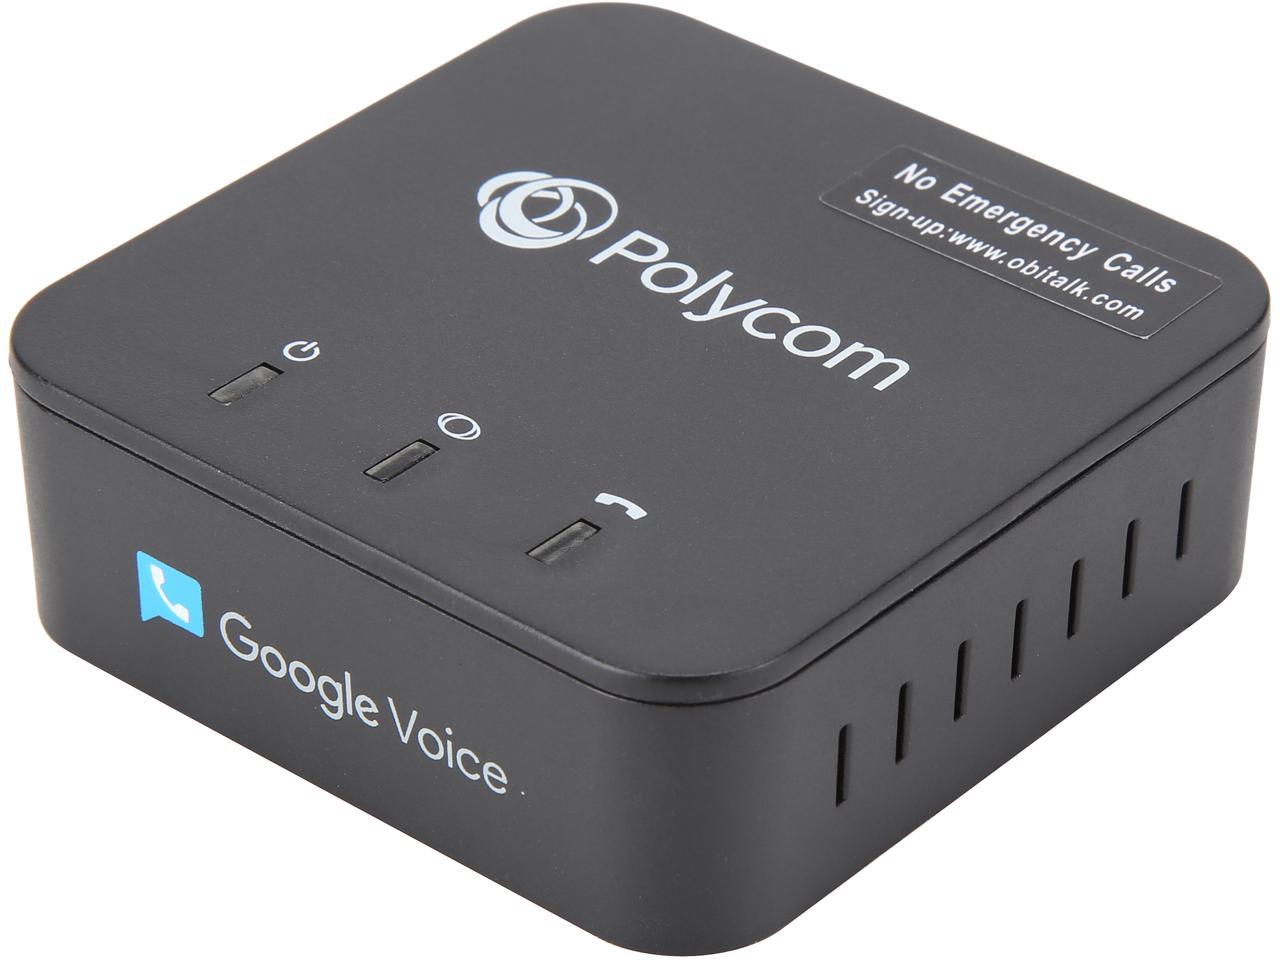 Polycom OBi200 VoIP Google Voice Digital Internet Telephone Adapter $39.99 AC + Free Shipping via Newegg